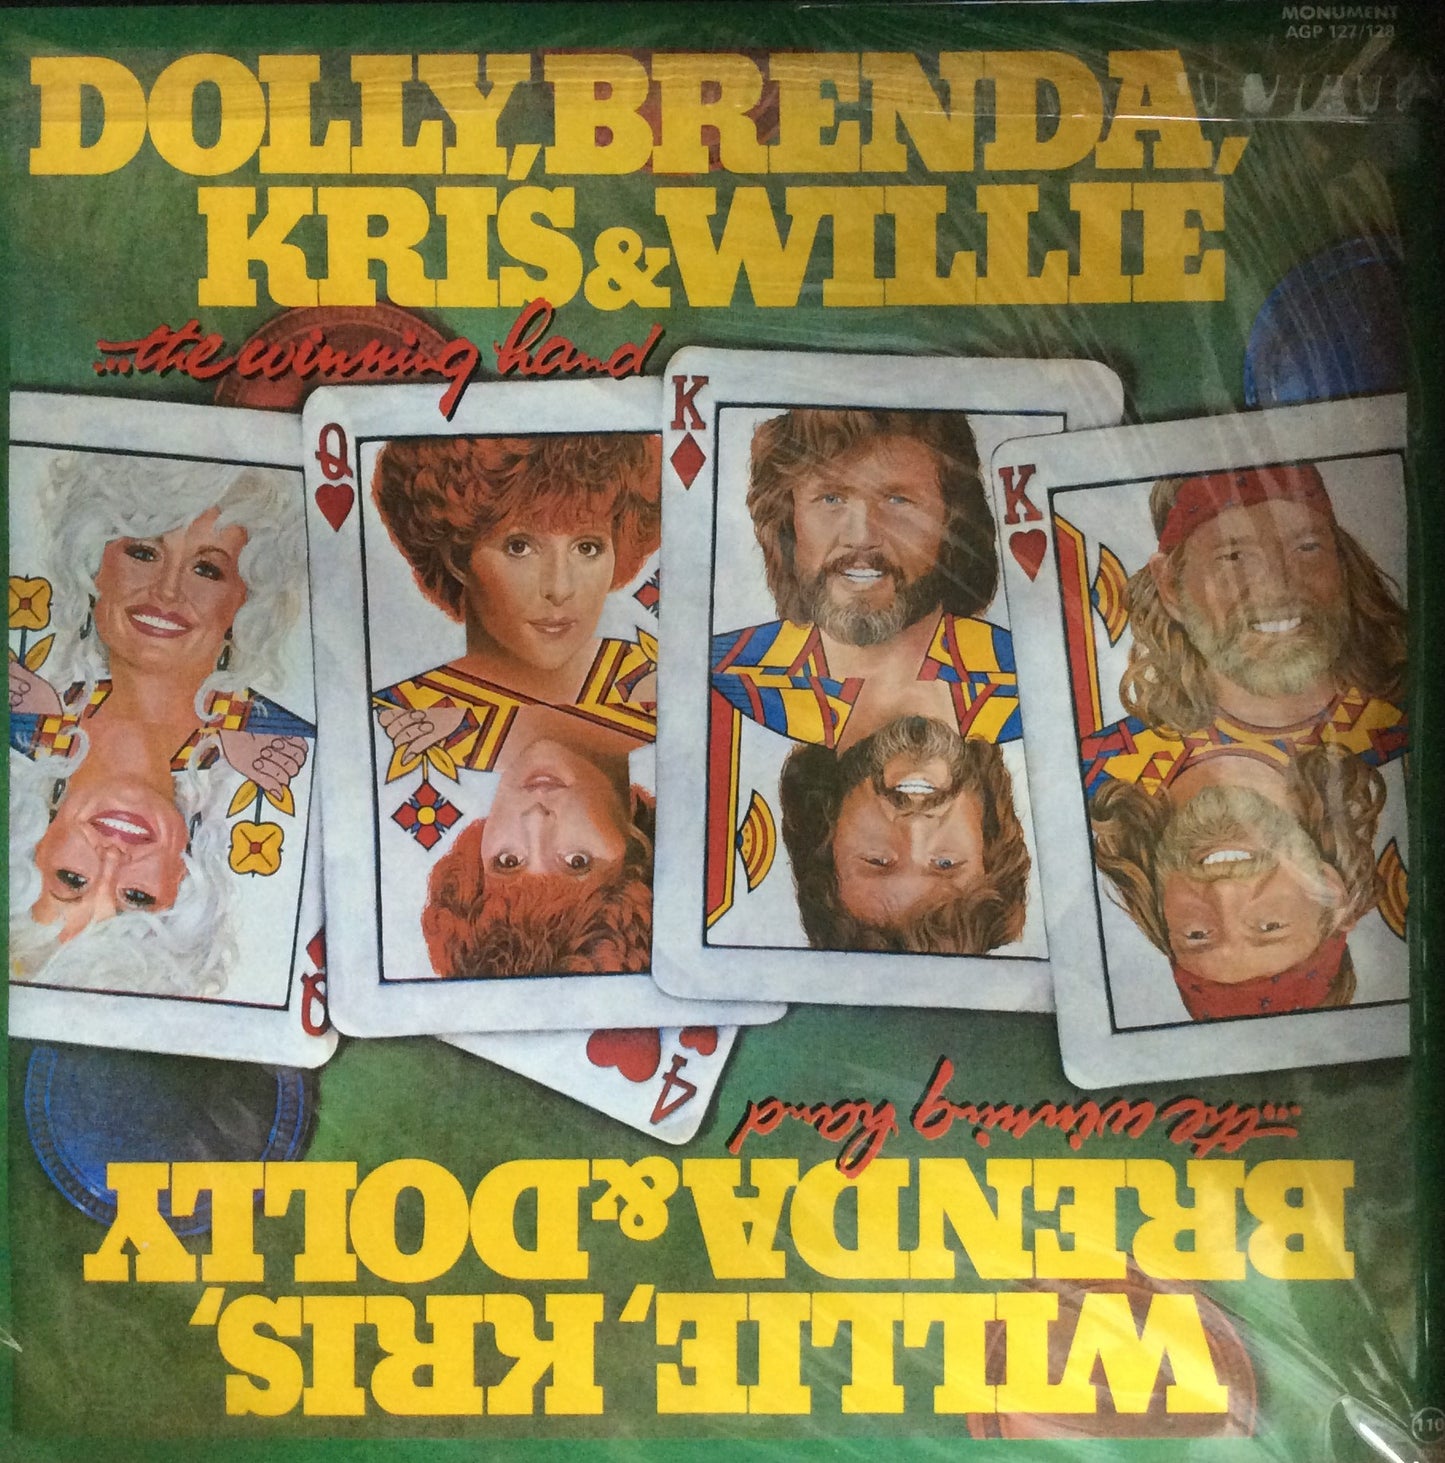 Kris, Willie, Dolly & Brenda - The Winning Hand